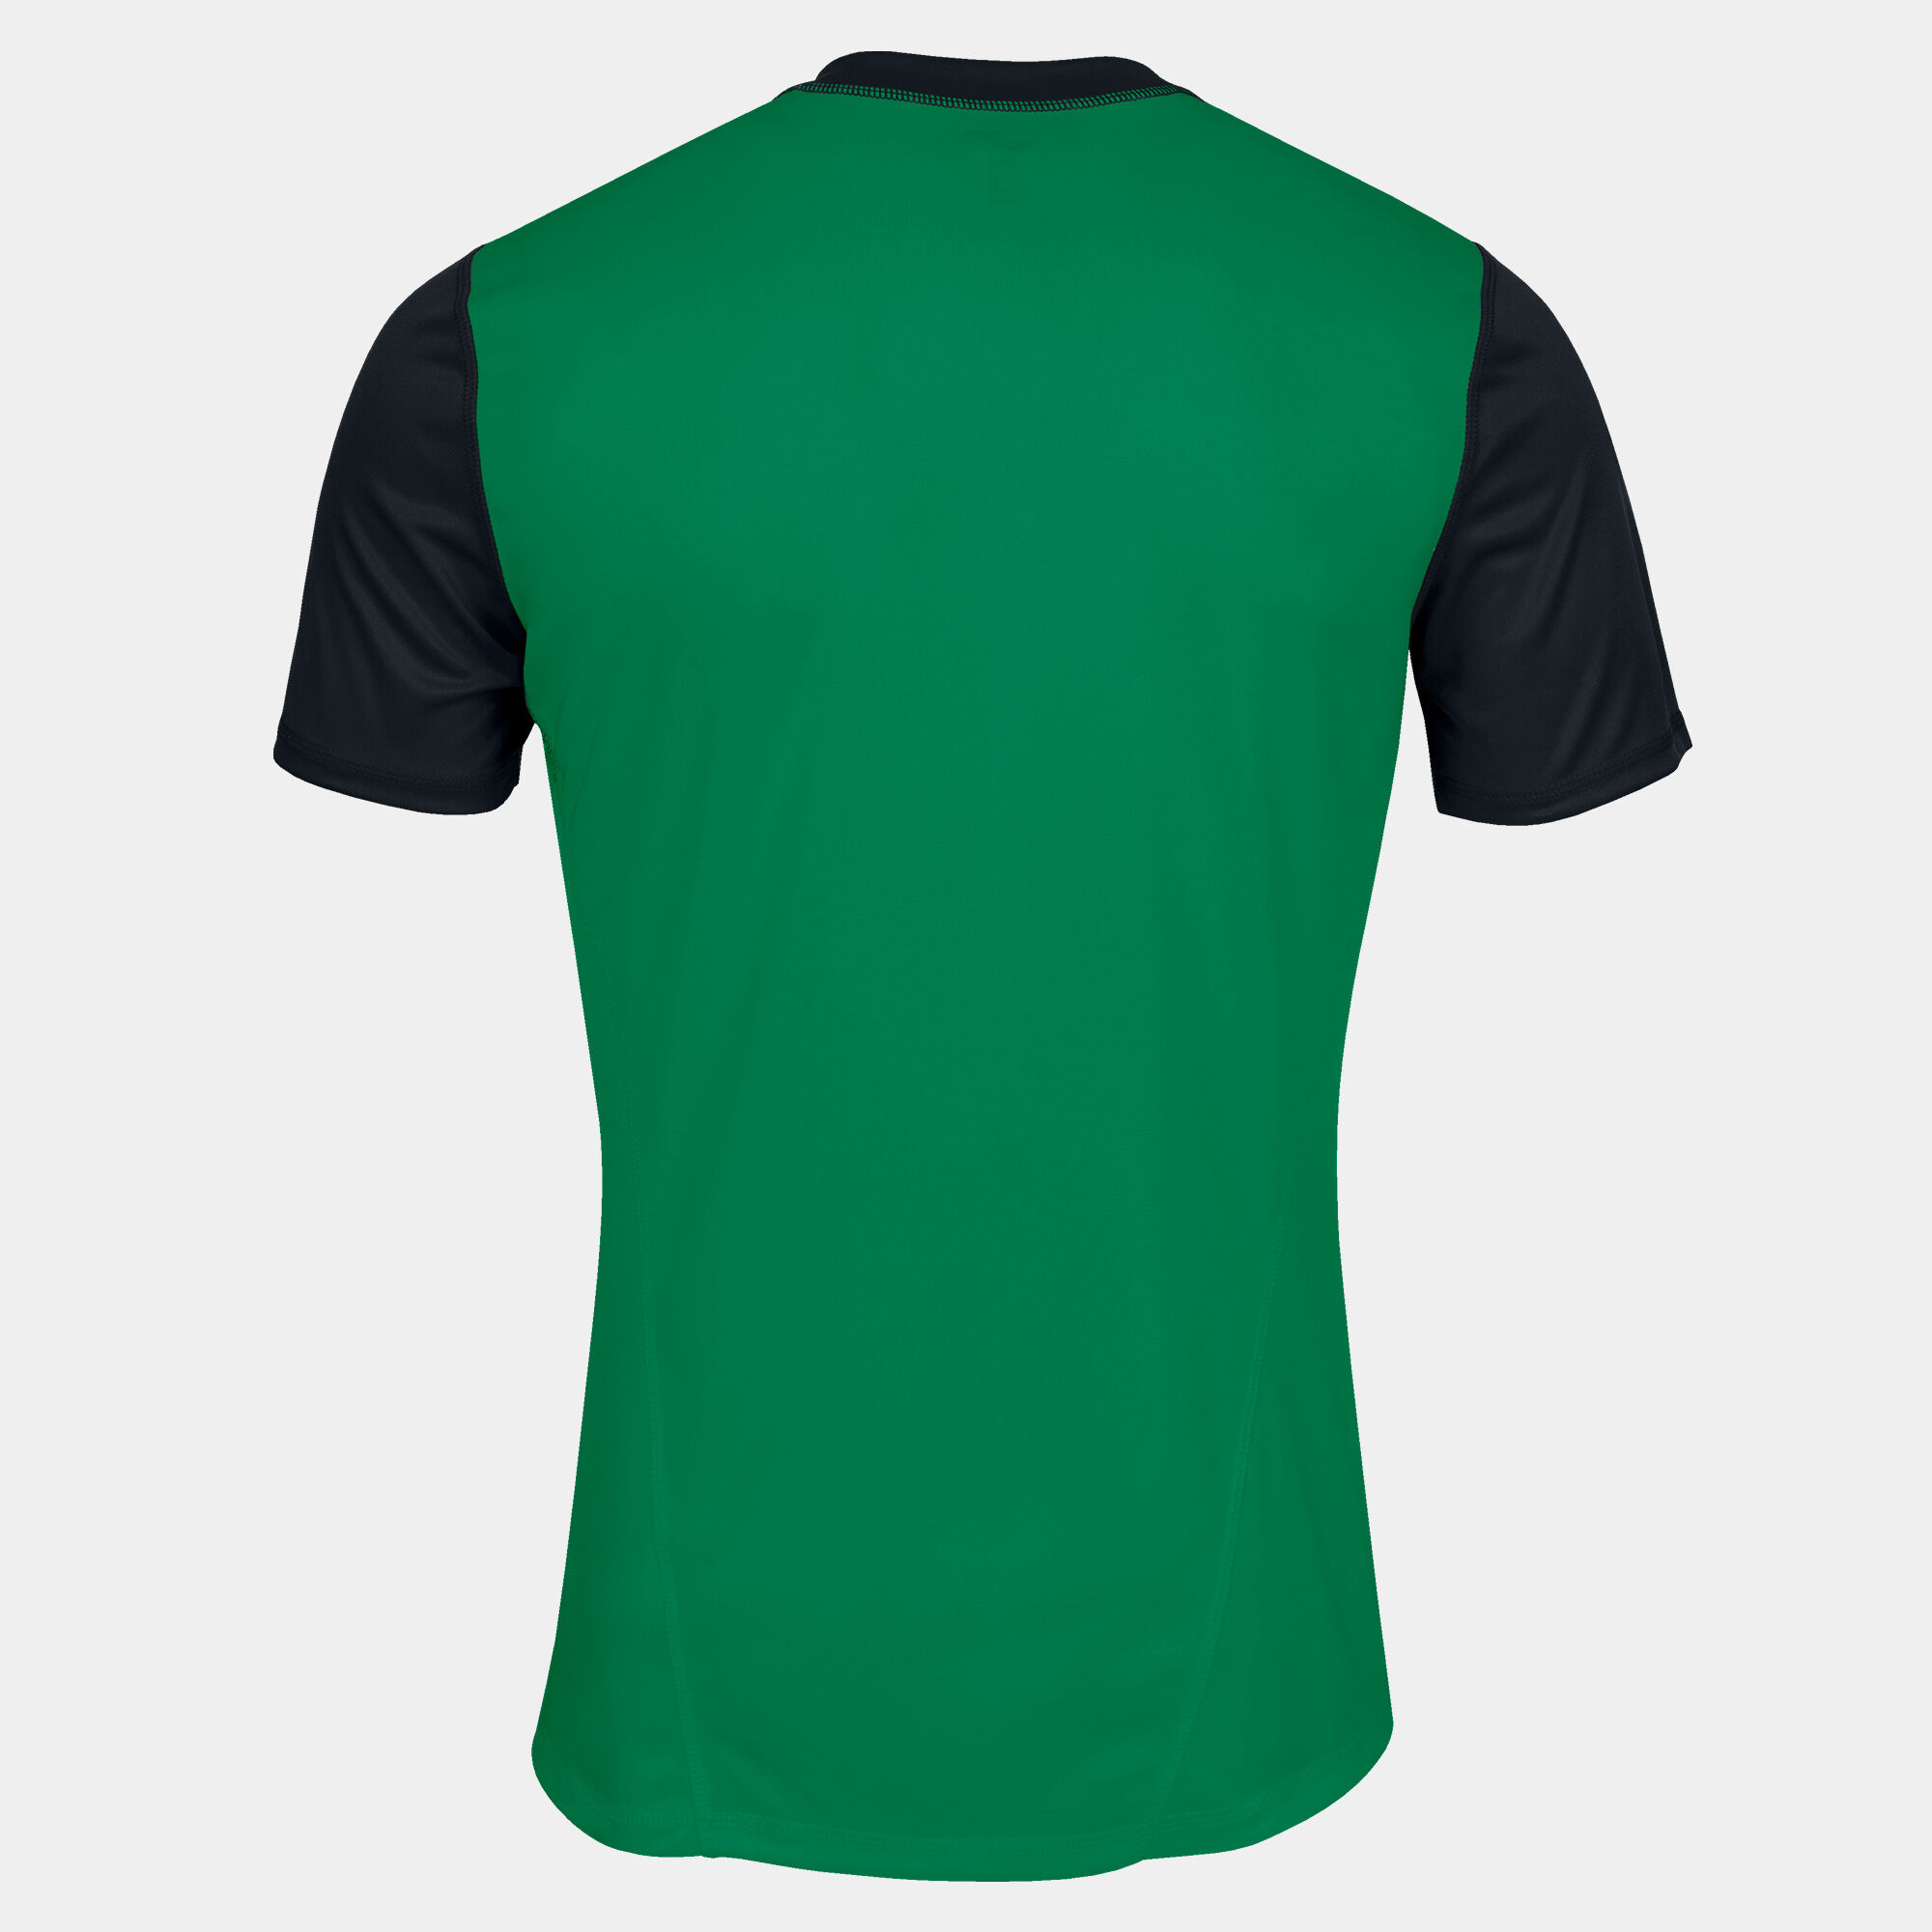 Camiseta manga corta hombre Hispa IV verde negro